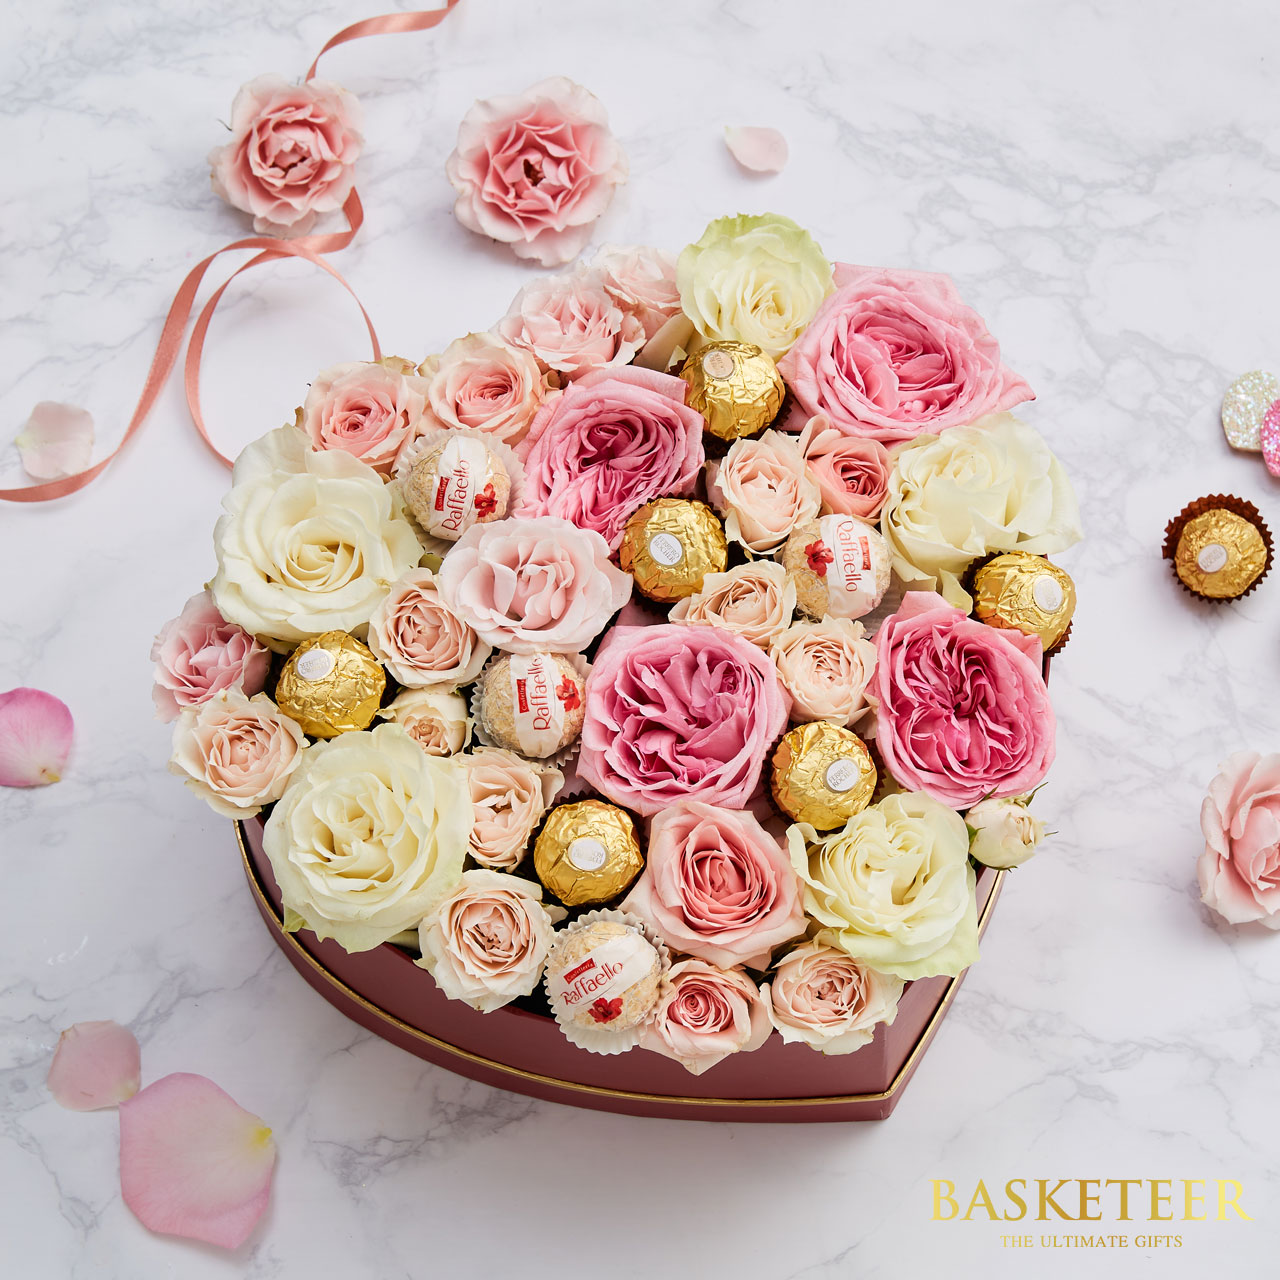 Ferrero Rocher With Sweet Flowers in a heart-shaped gift box.